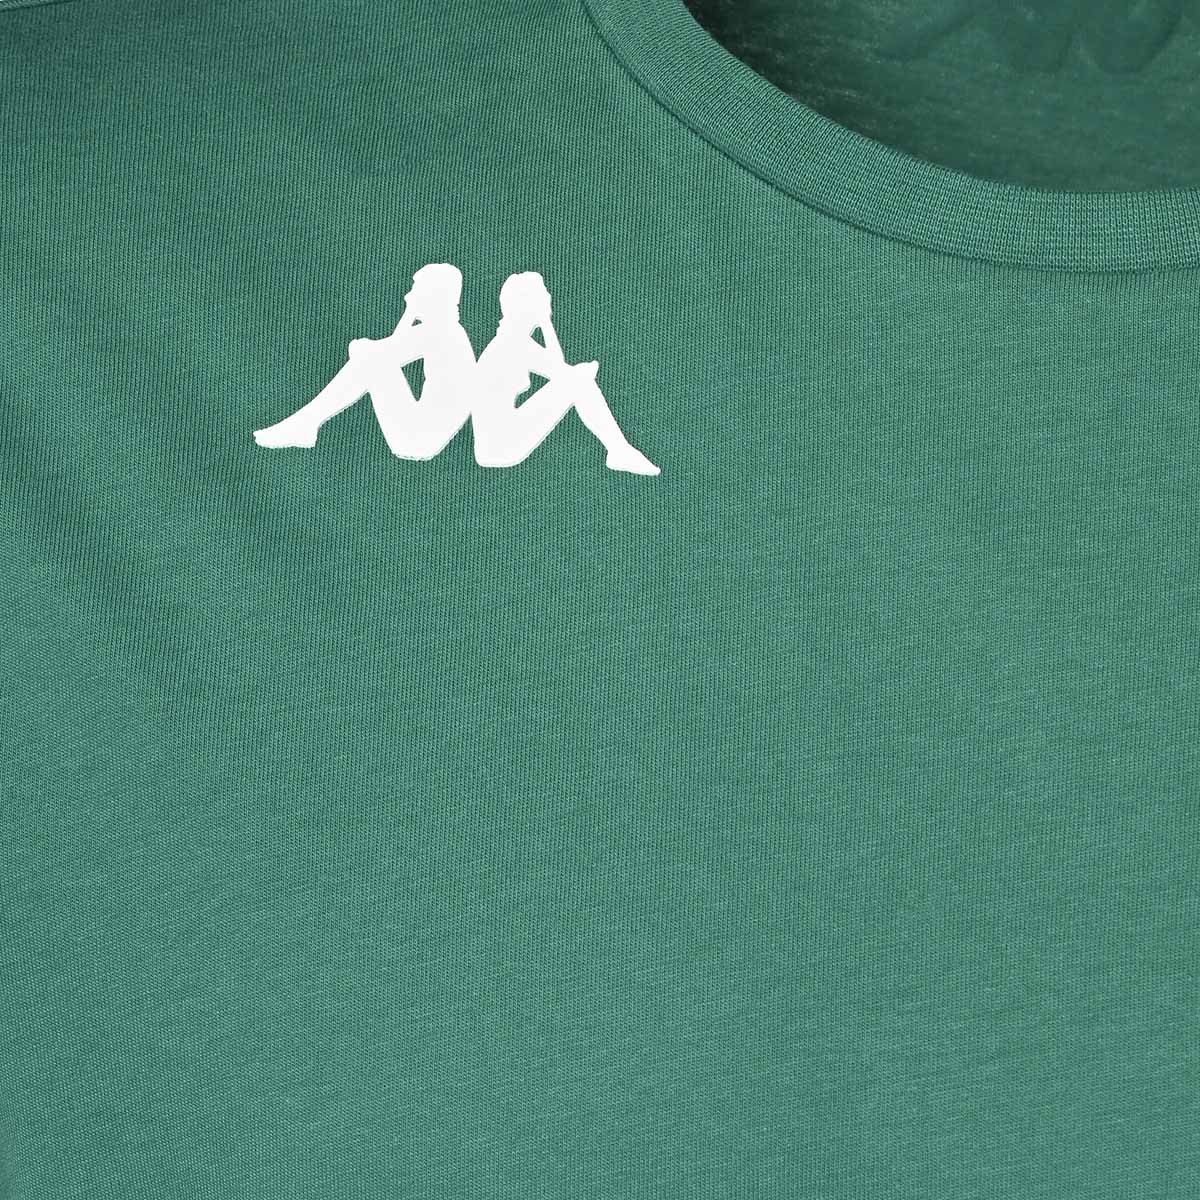 T-shirt Brizzo Vert Homme